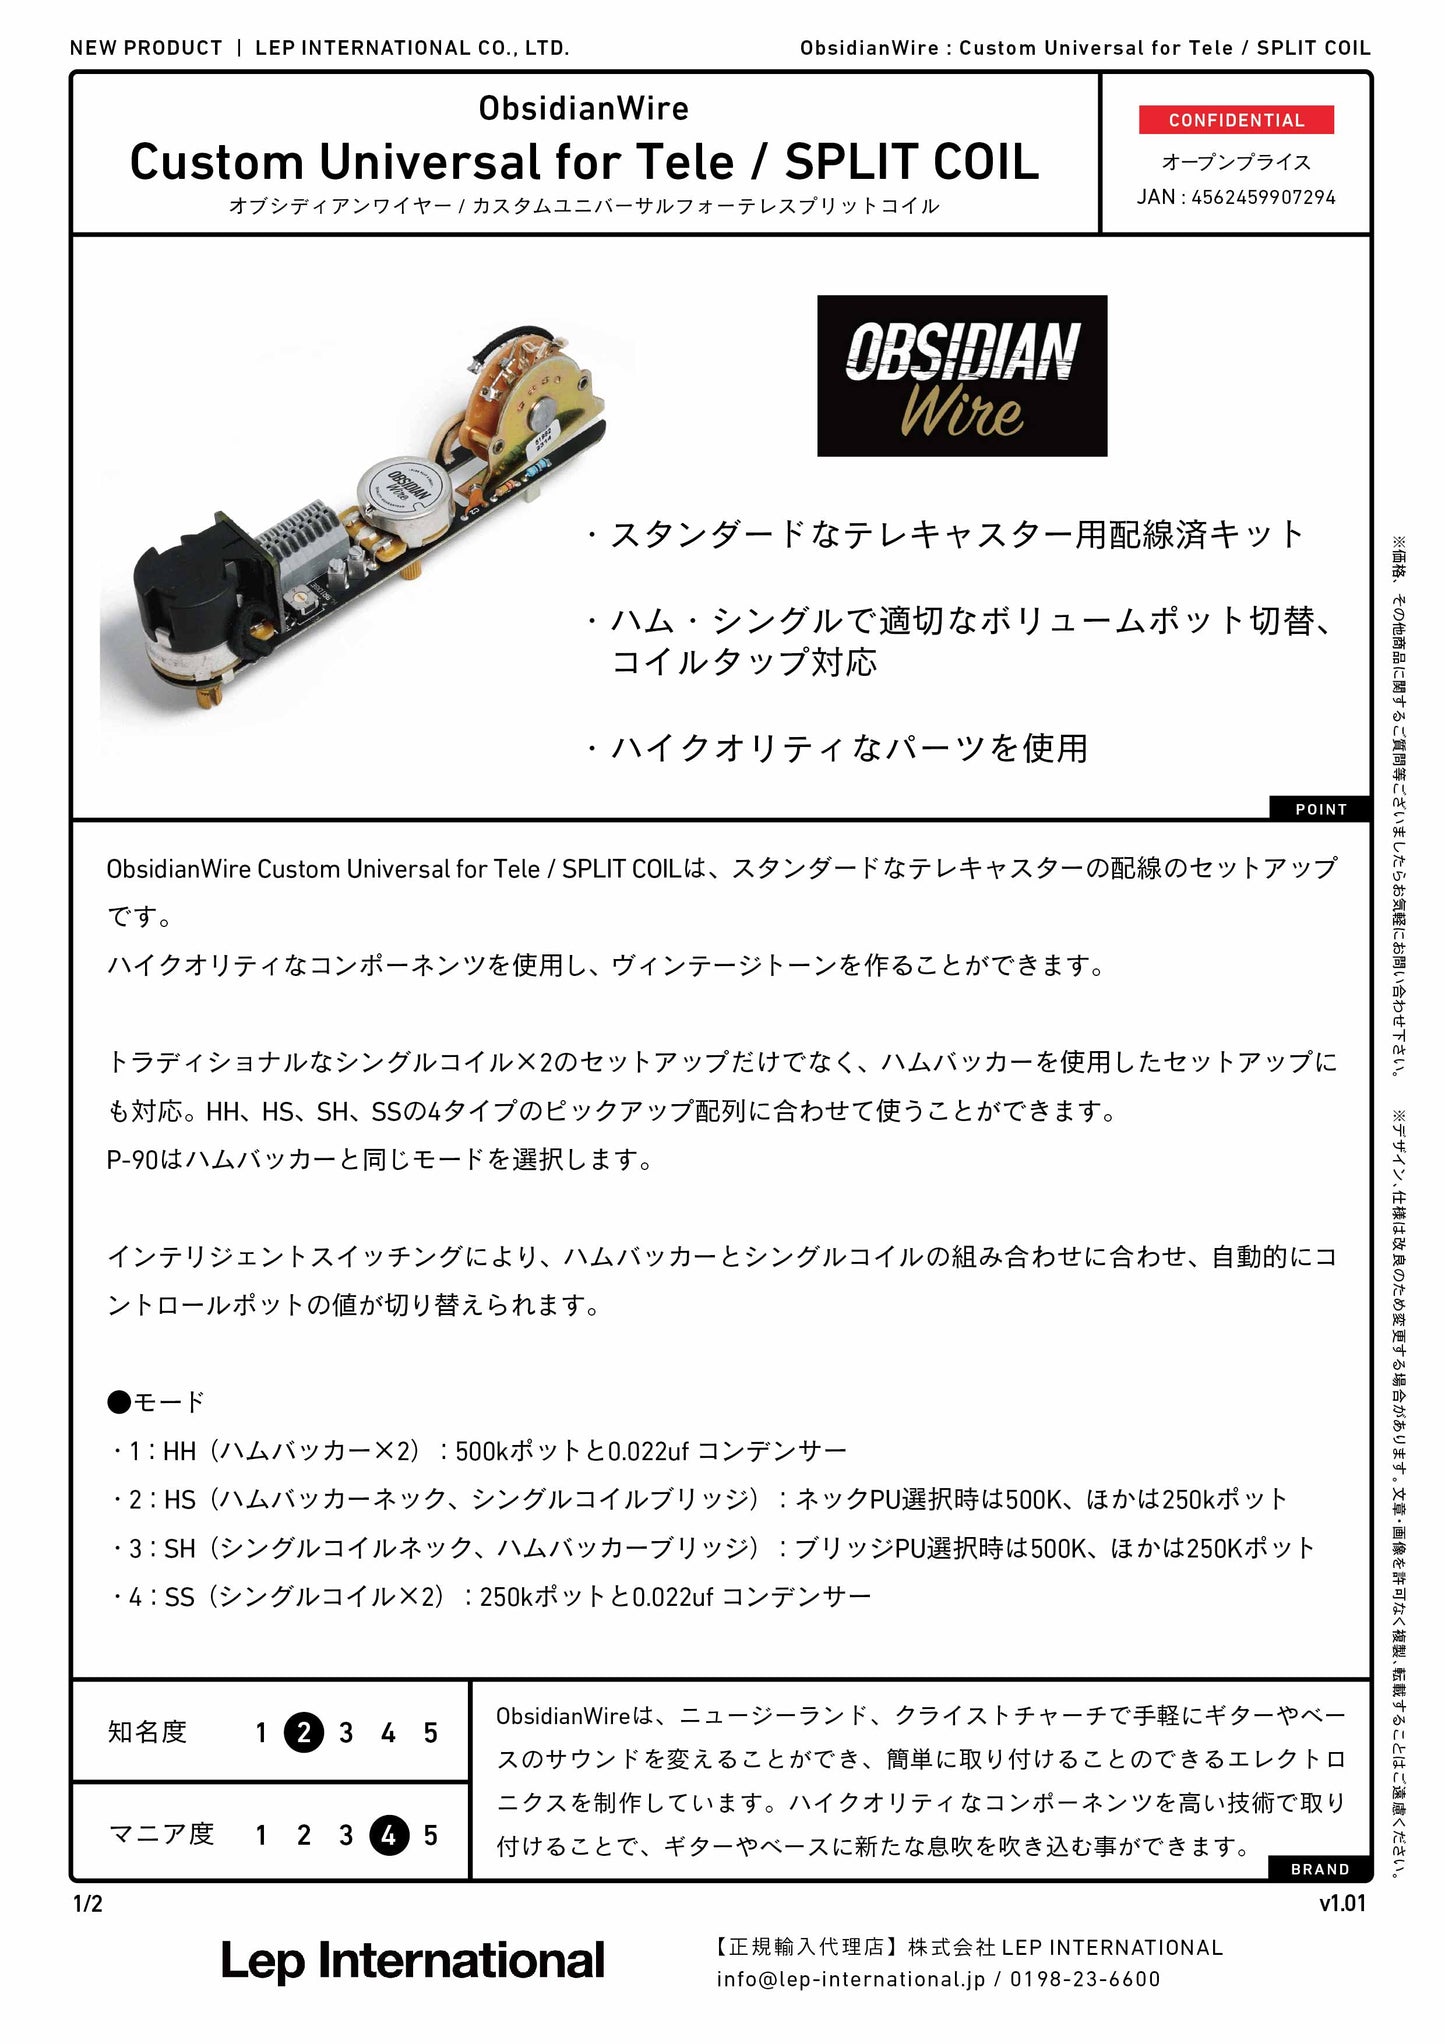 ObsidianWire / Custom Universal for Tele / SPLIT COIL